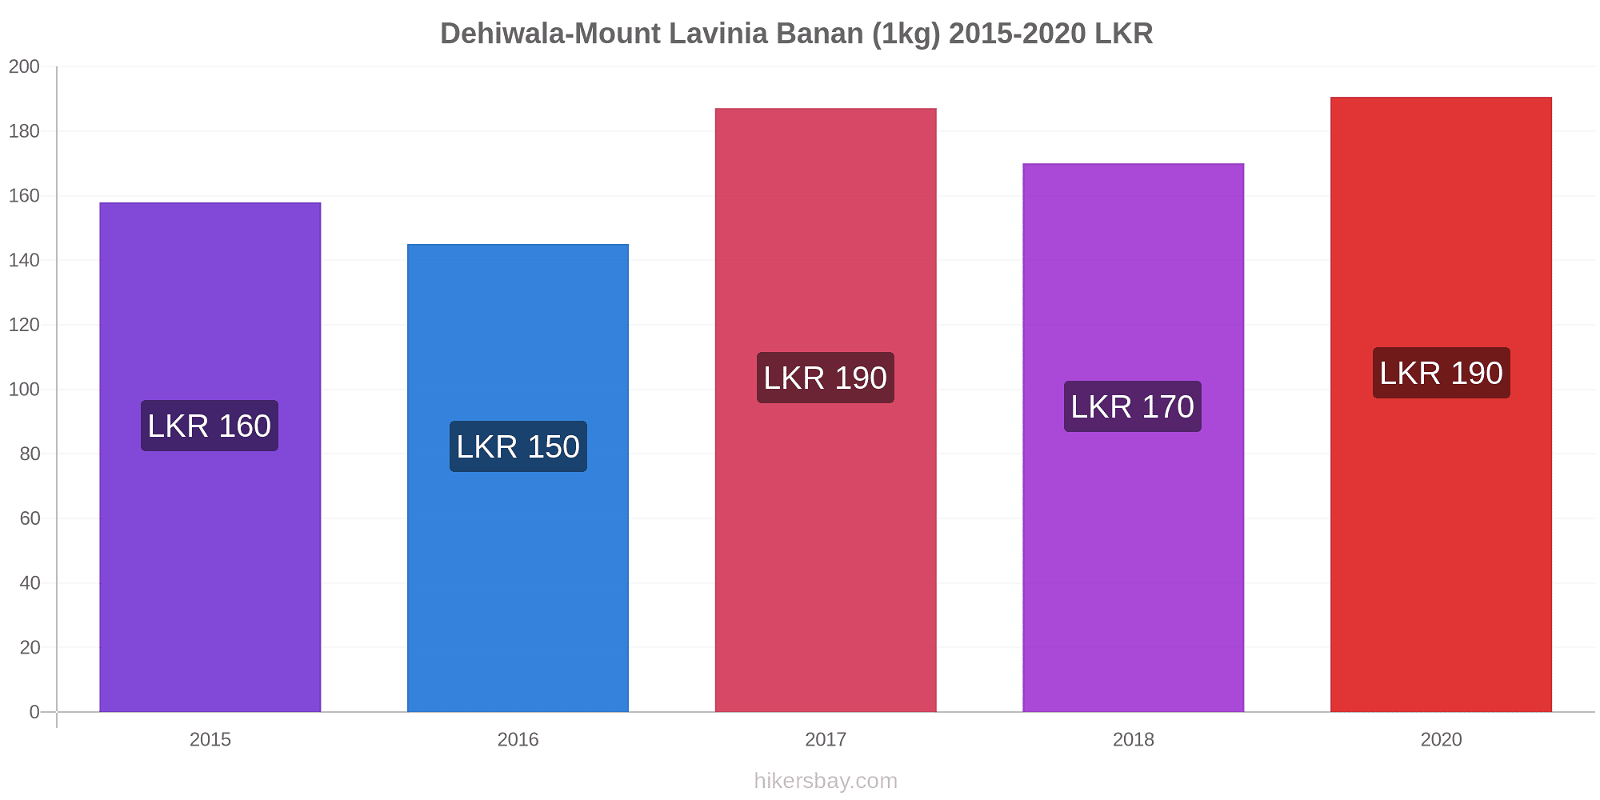 Dehiwala-Mount Lavinia prisændringer Banan (1kg) hikersbay.com